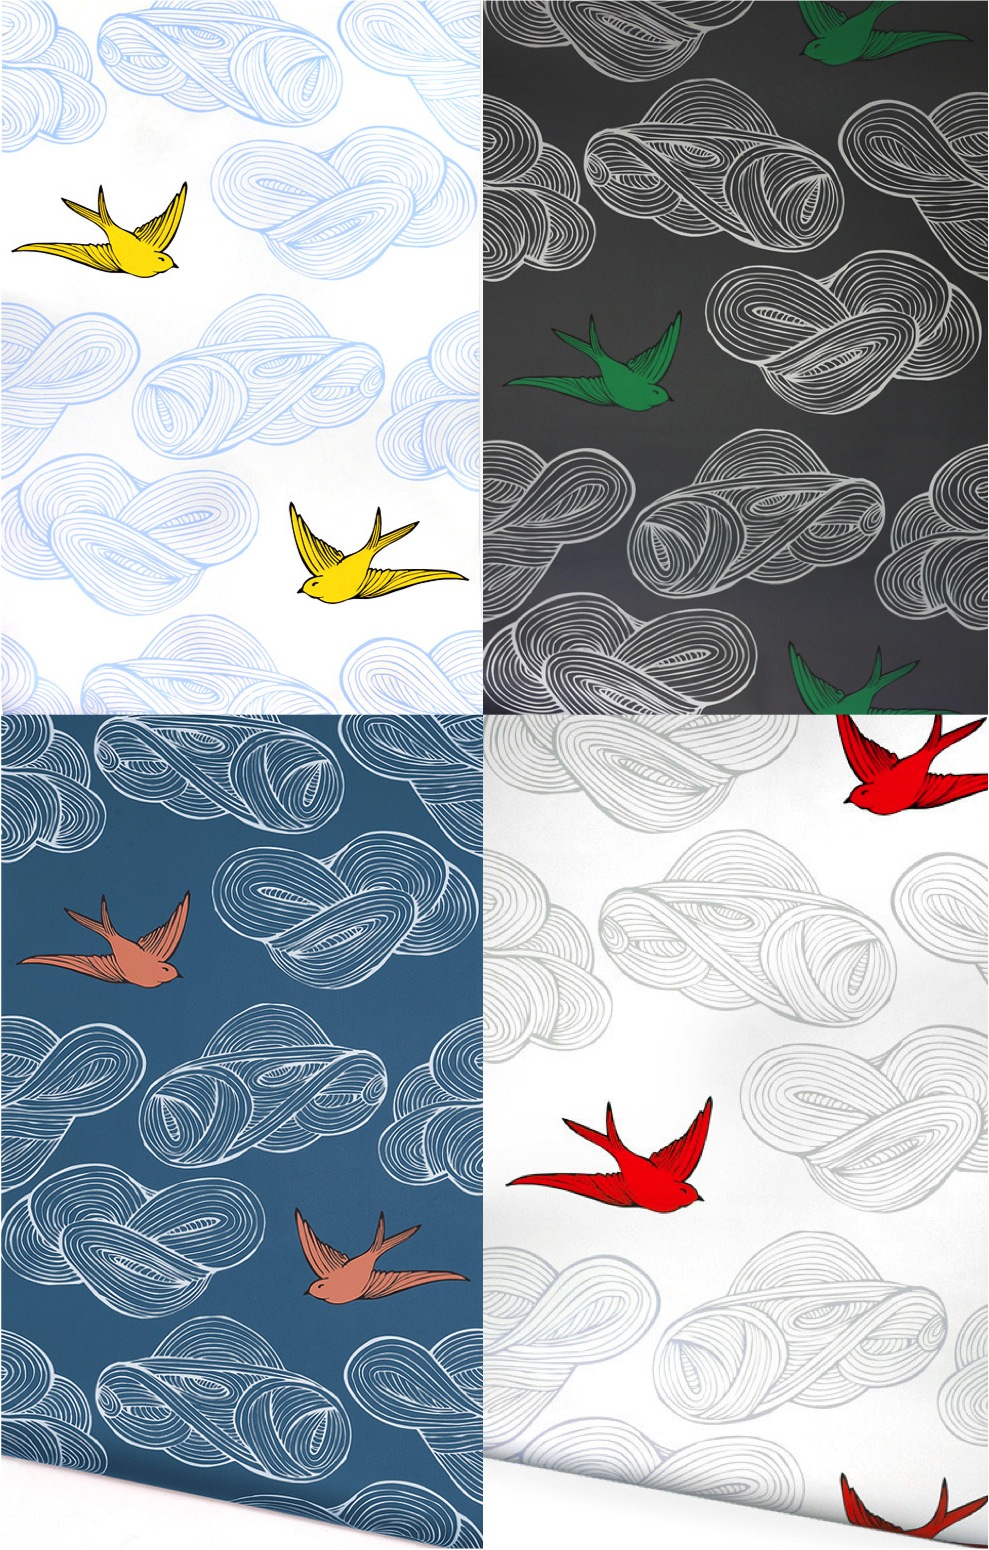 "birds wallpaper for a nursery"